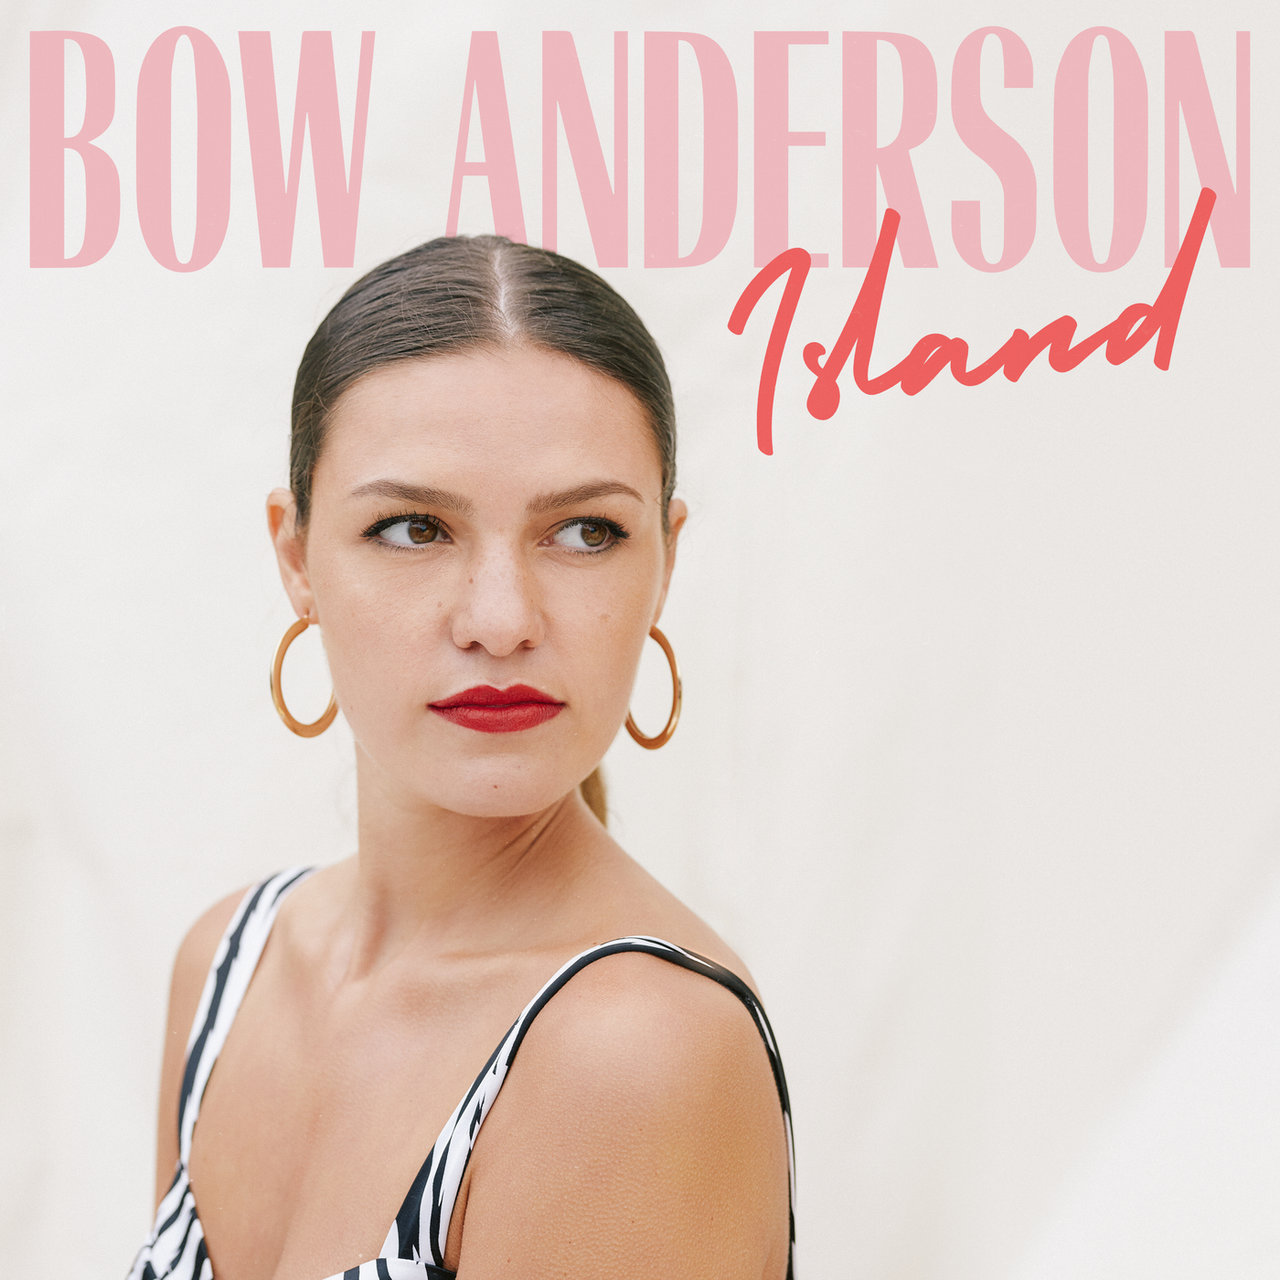 Bow Anderson Island cover artwork